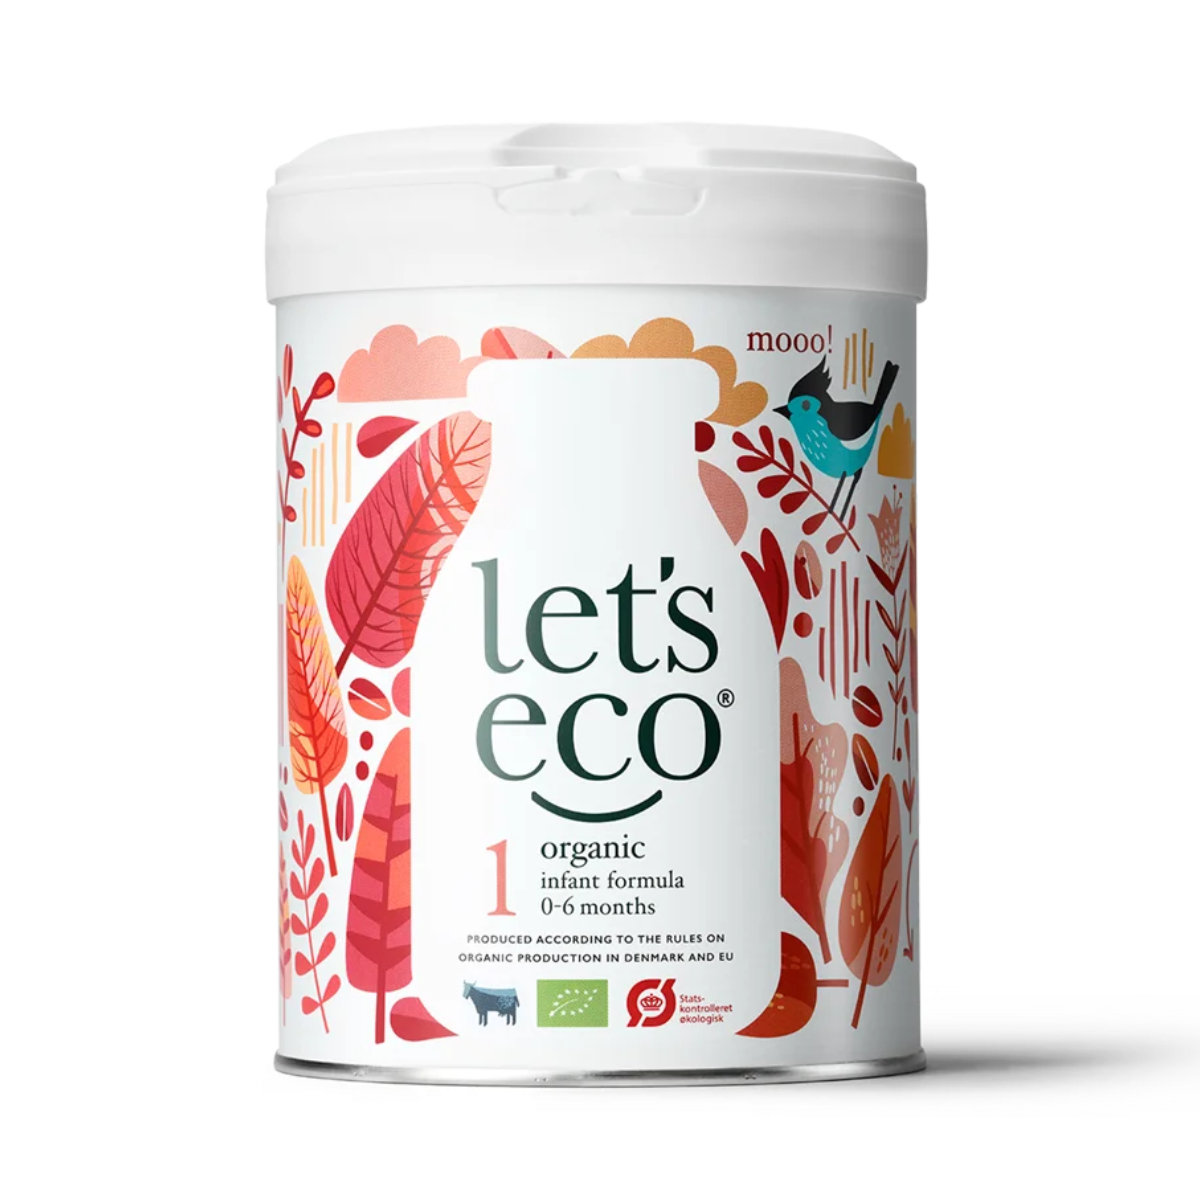 Sữa Let s Eco Organic số 1 cho trẻ từ 0 - 6 tháng